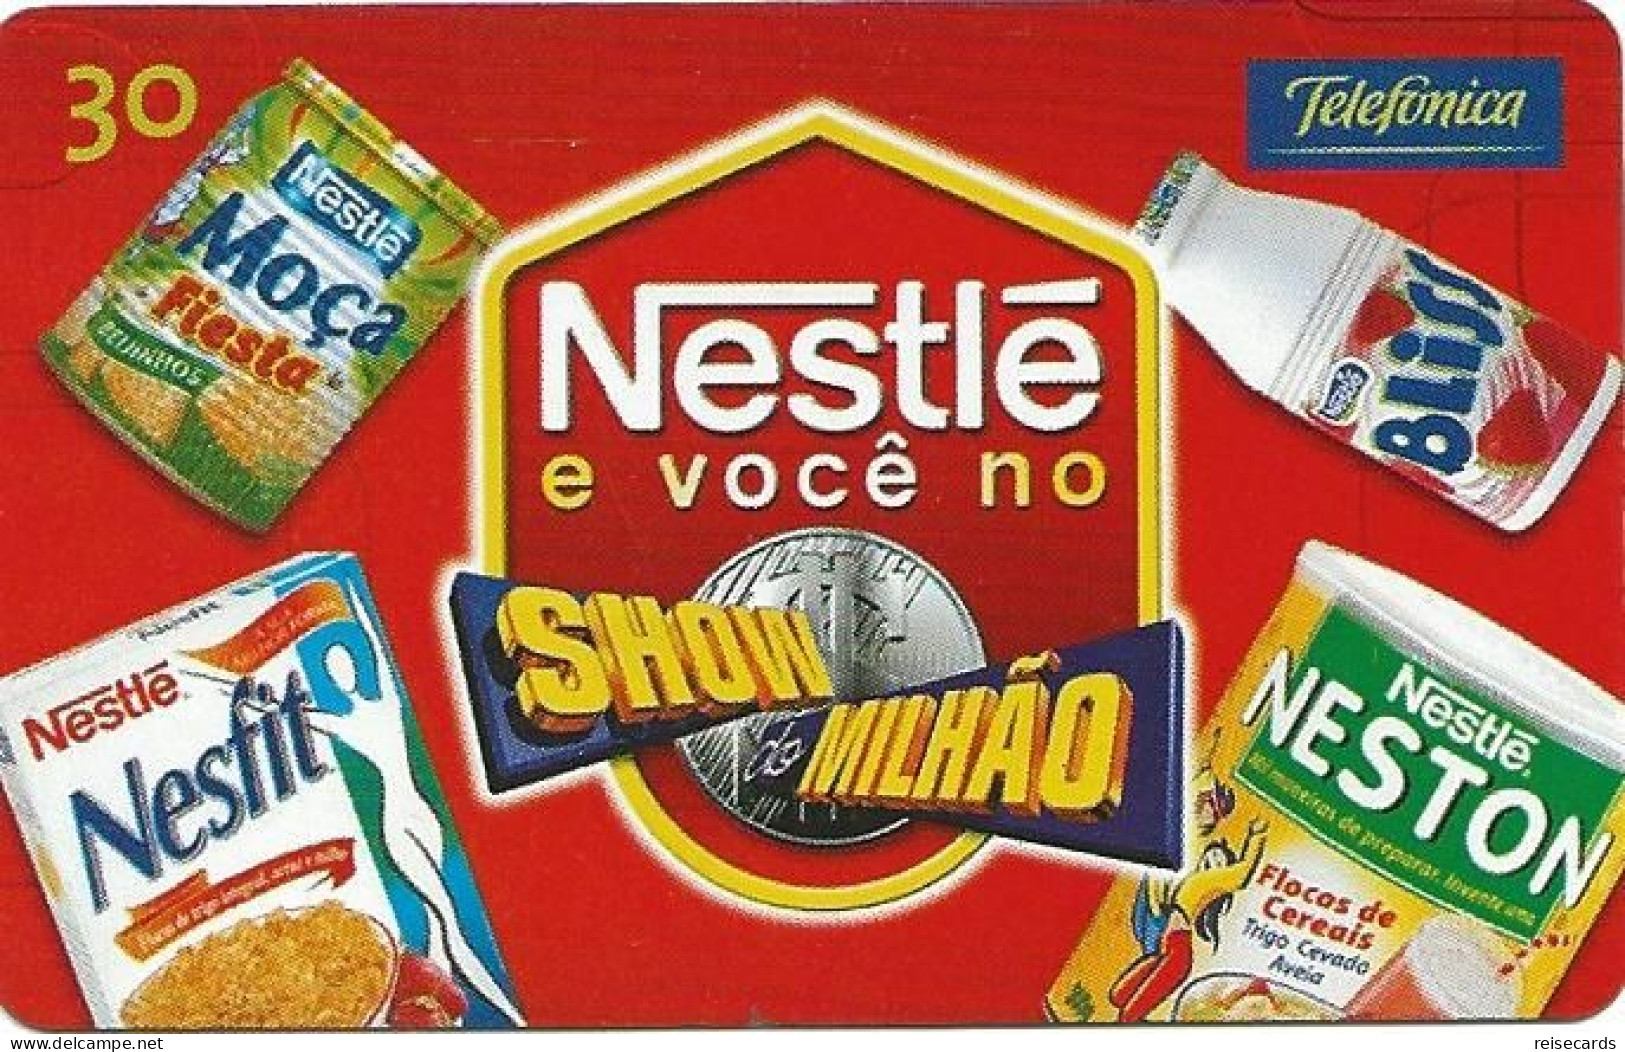 Brazil: Telefonica - Nestlé Show Milhao 05/2002 08/20 1606 - Brasilien